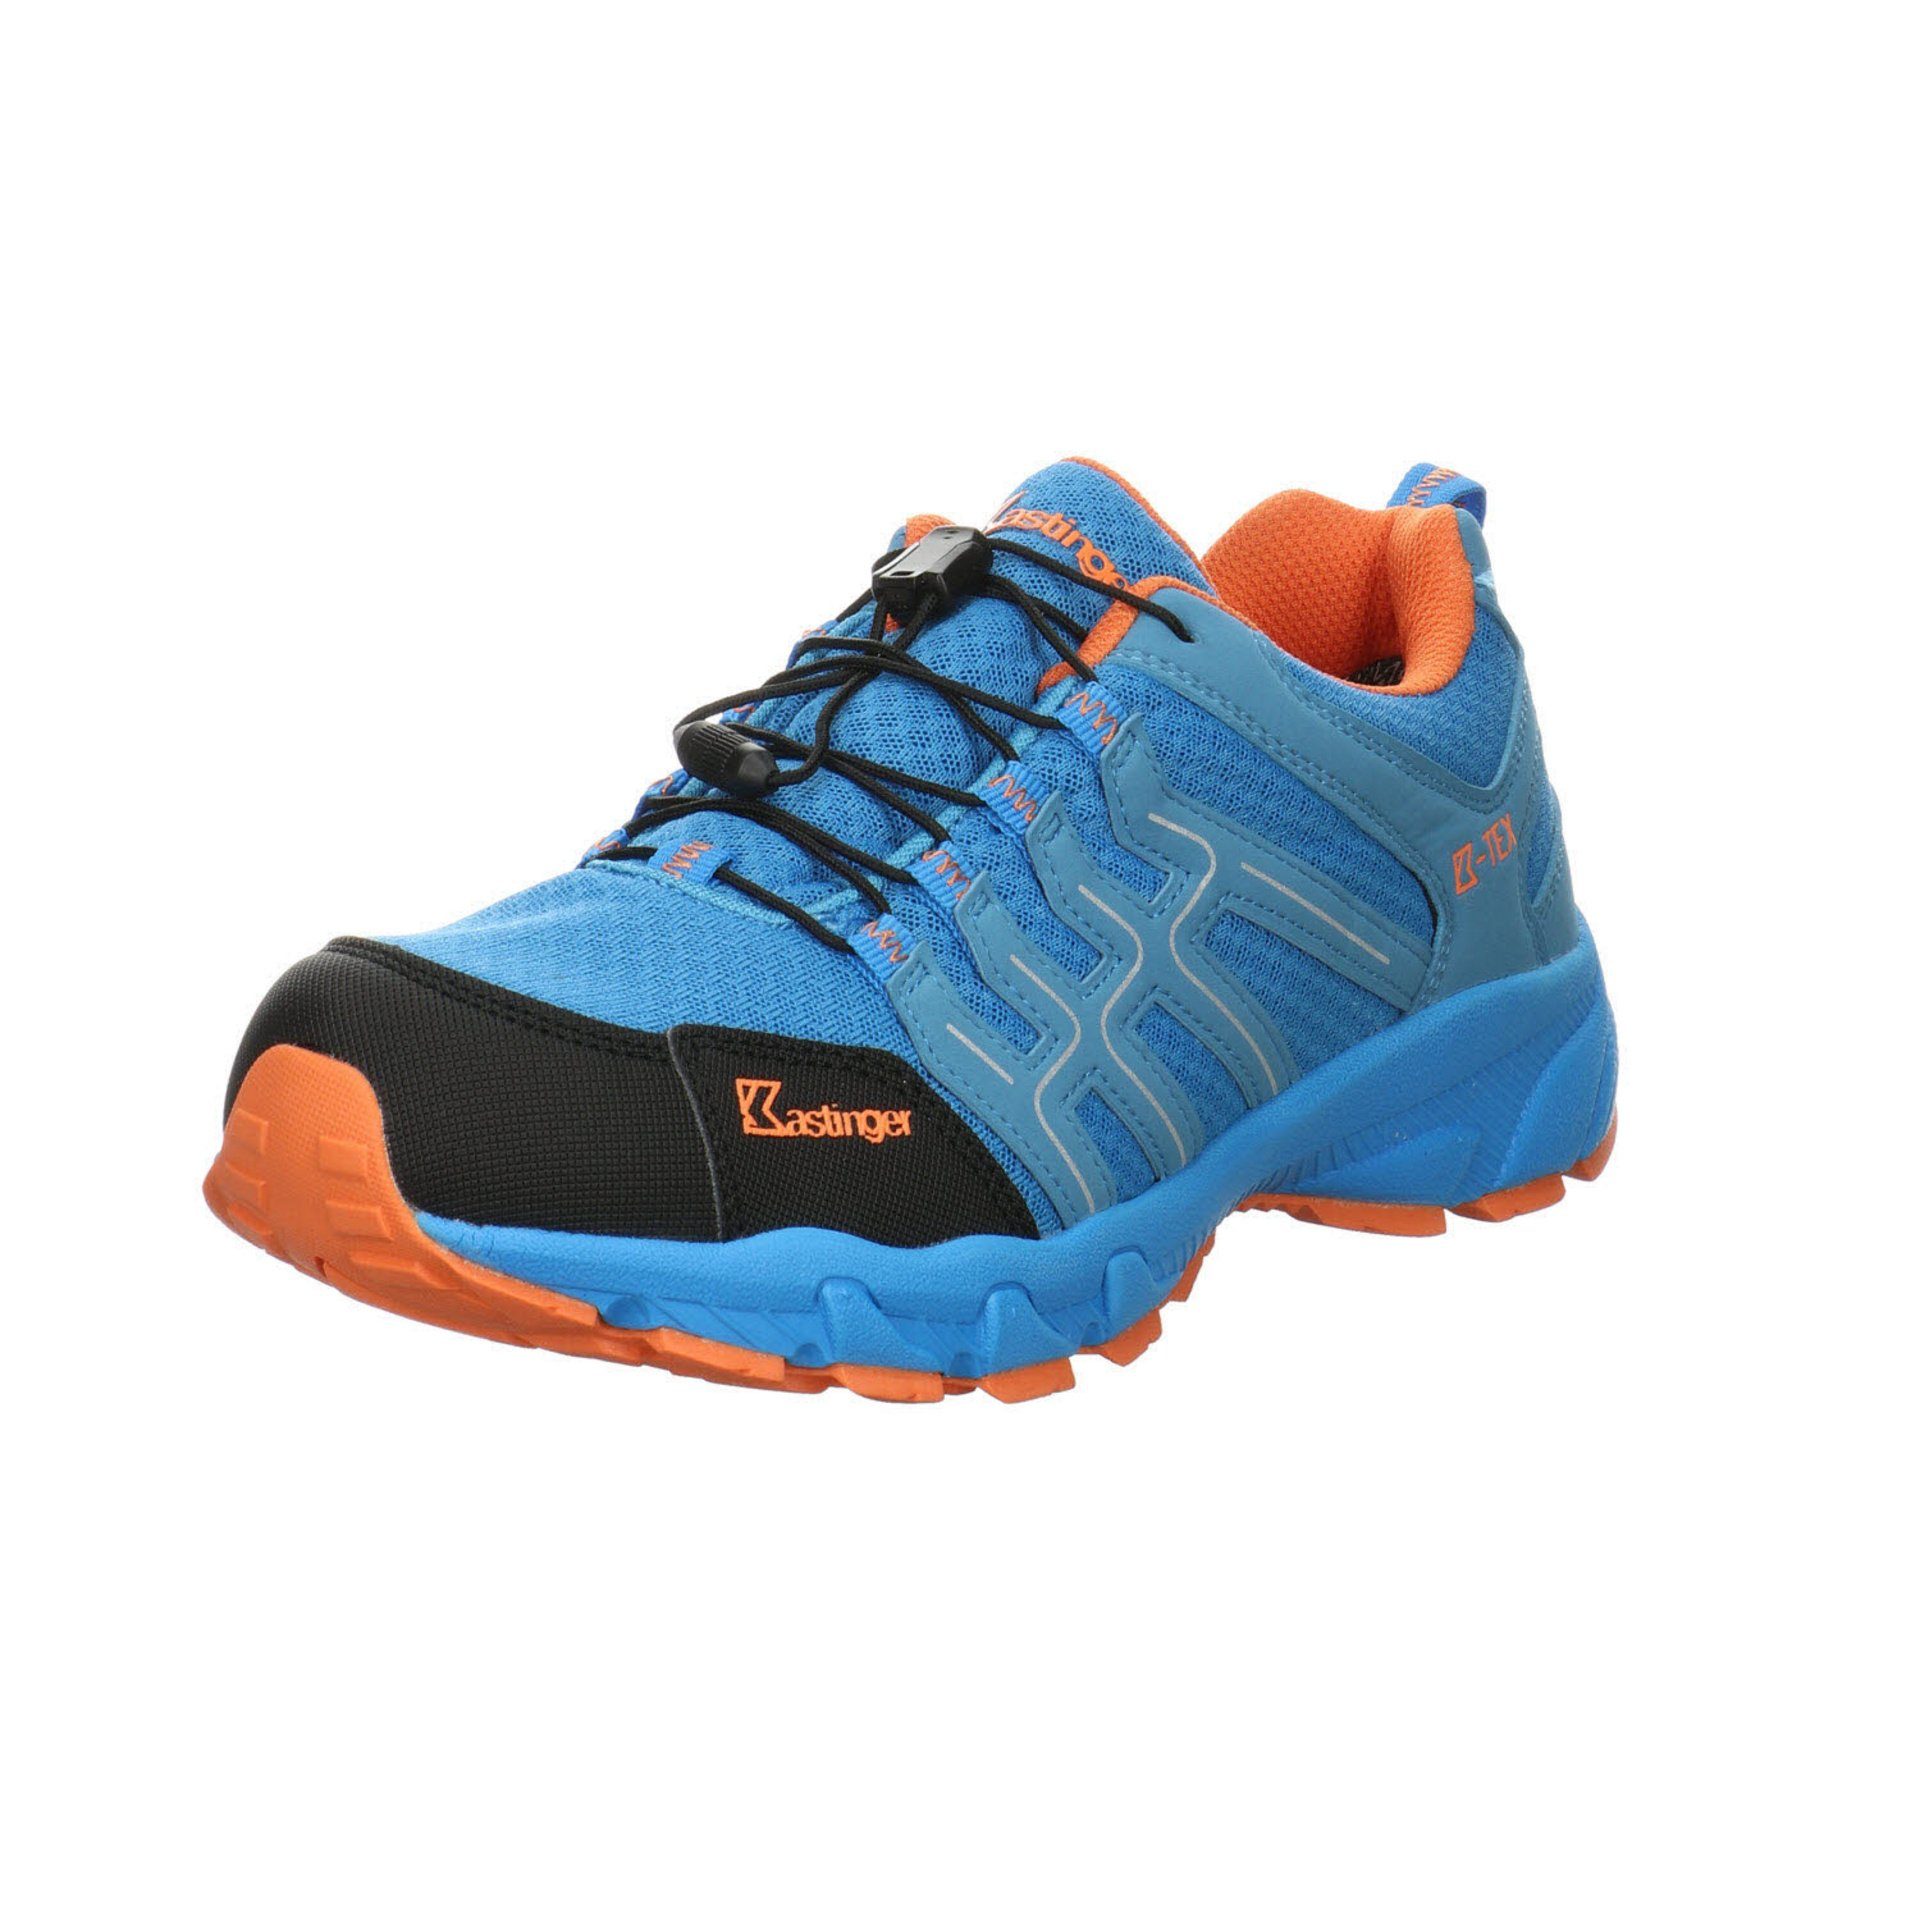 Kastinger Damen Schuhe Outdoor Trailrunner Outdoorschuh Outdoorschuh Synthetikkombination blue/orange | 